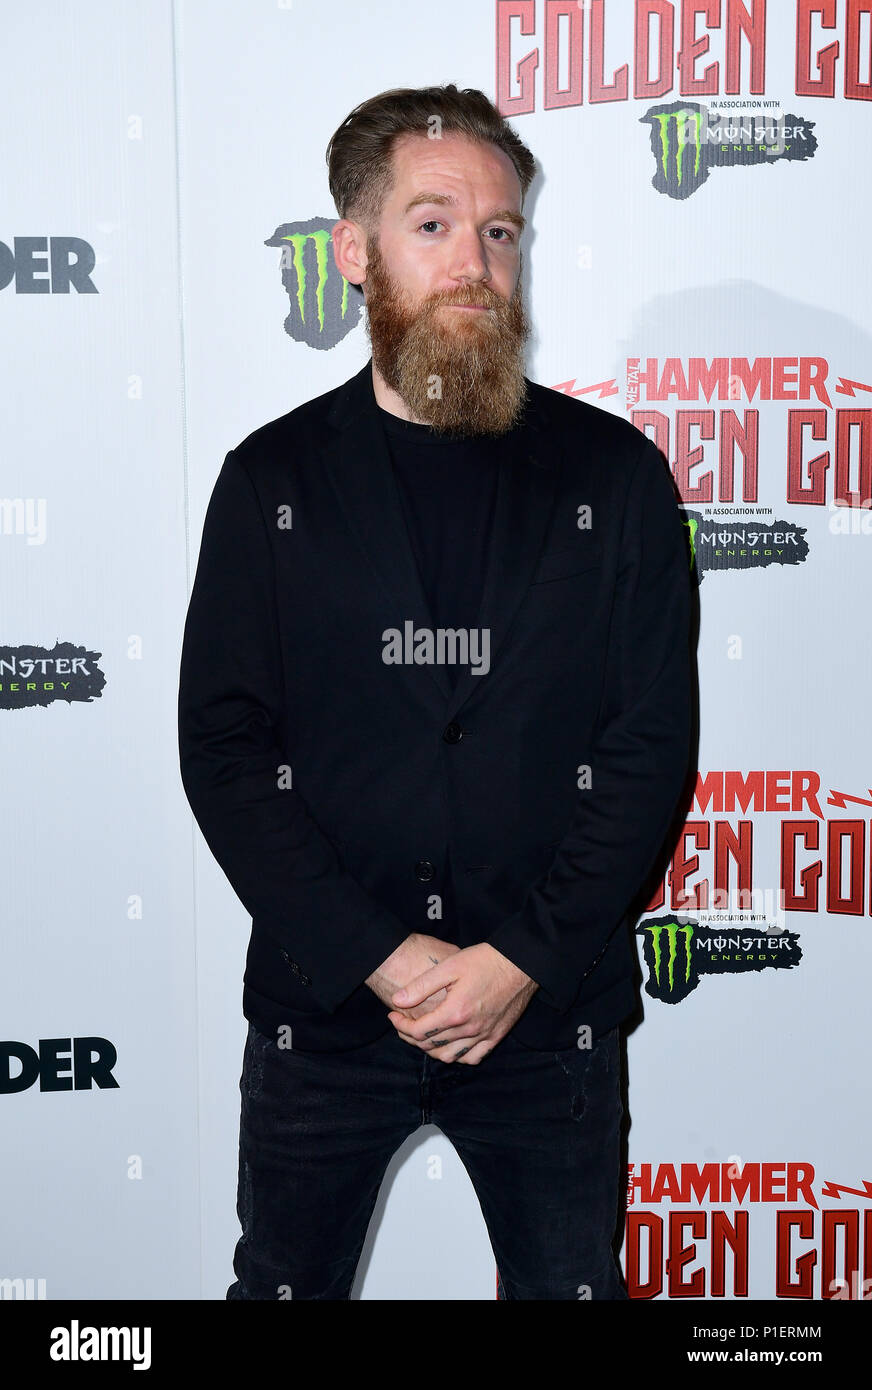 Merlin Sutter de Cellar Darling participant à la Metal Hammer Golden Gods Awards 2018 tenue à l'indigo à l'O2 à Londres. Banque D'Images